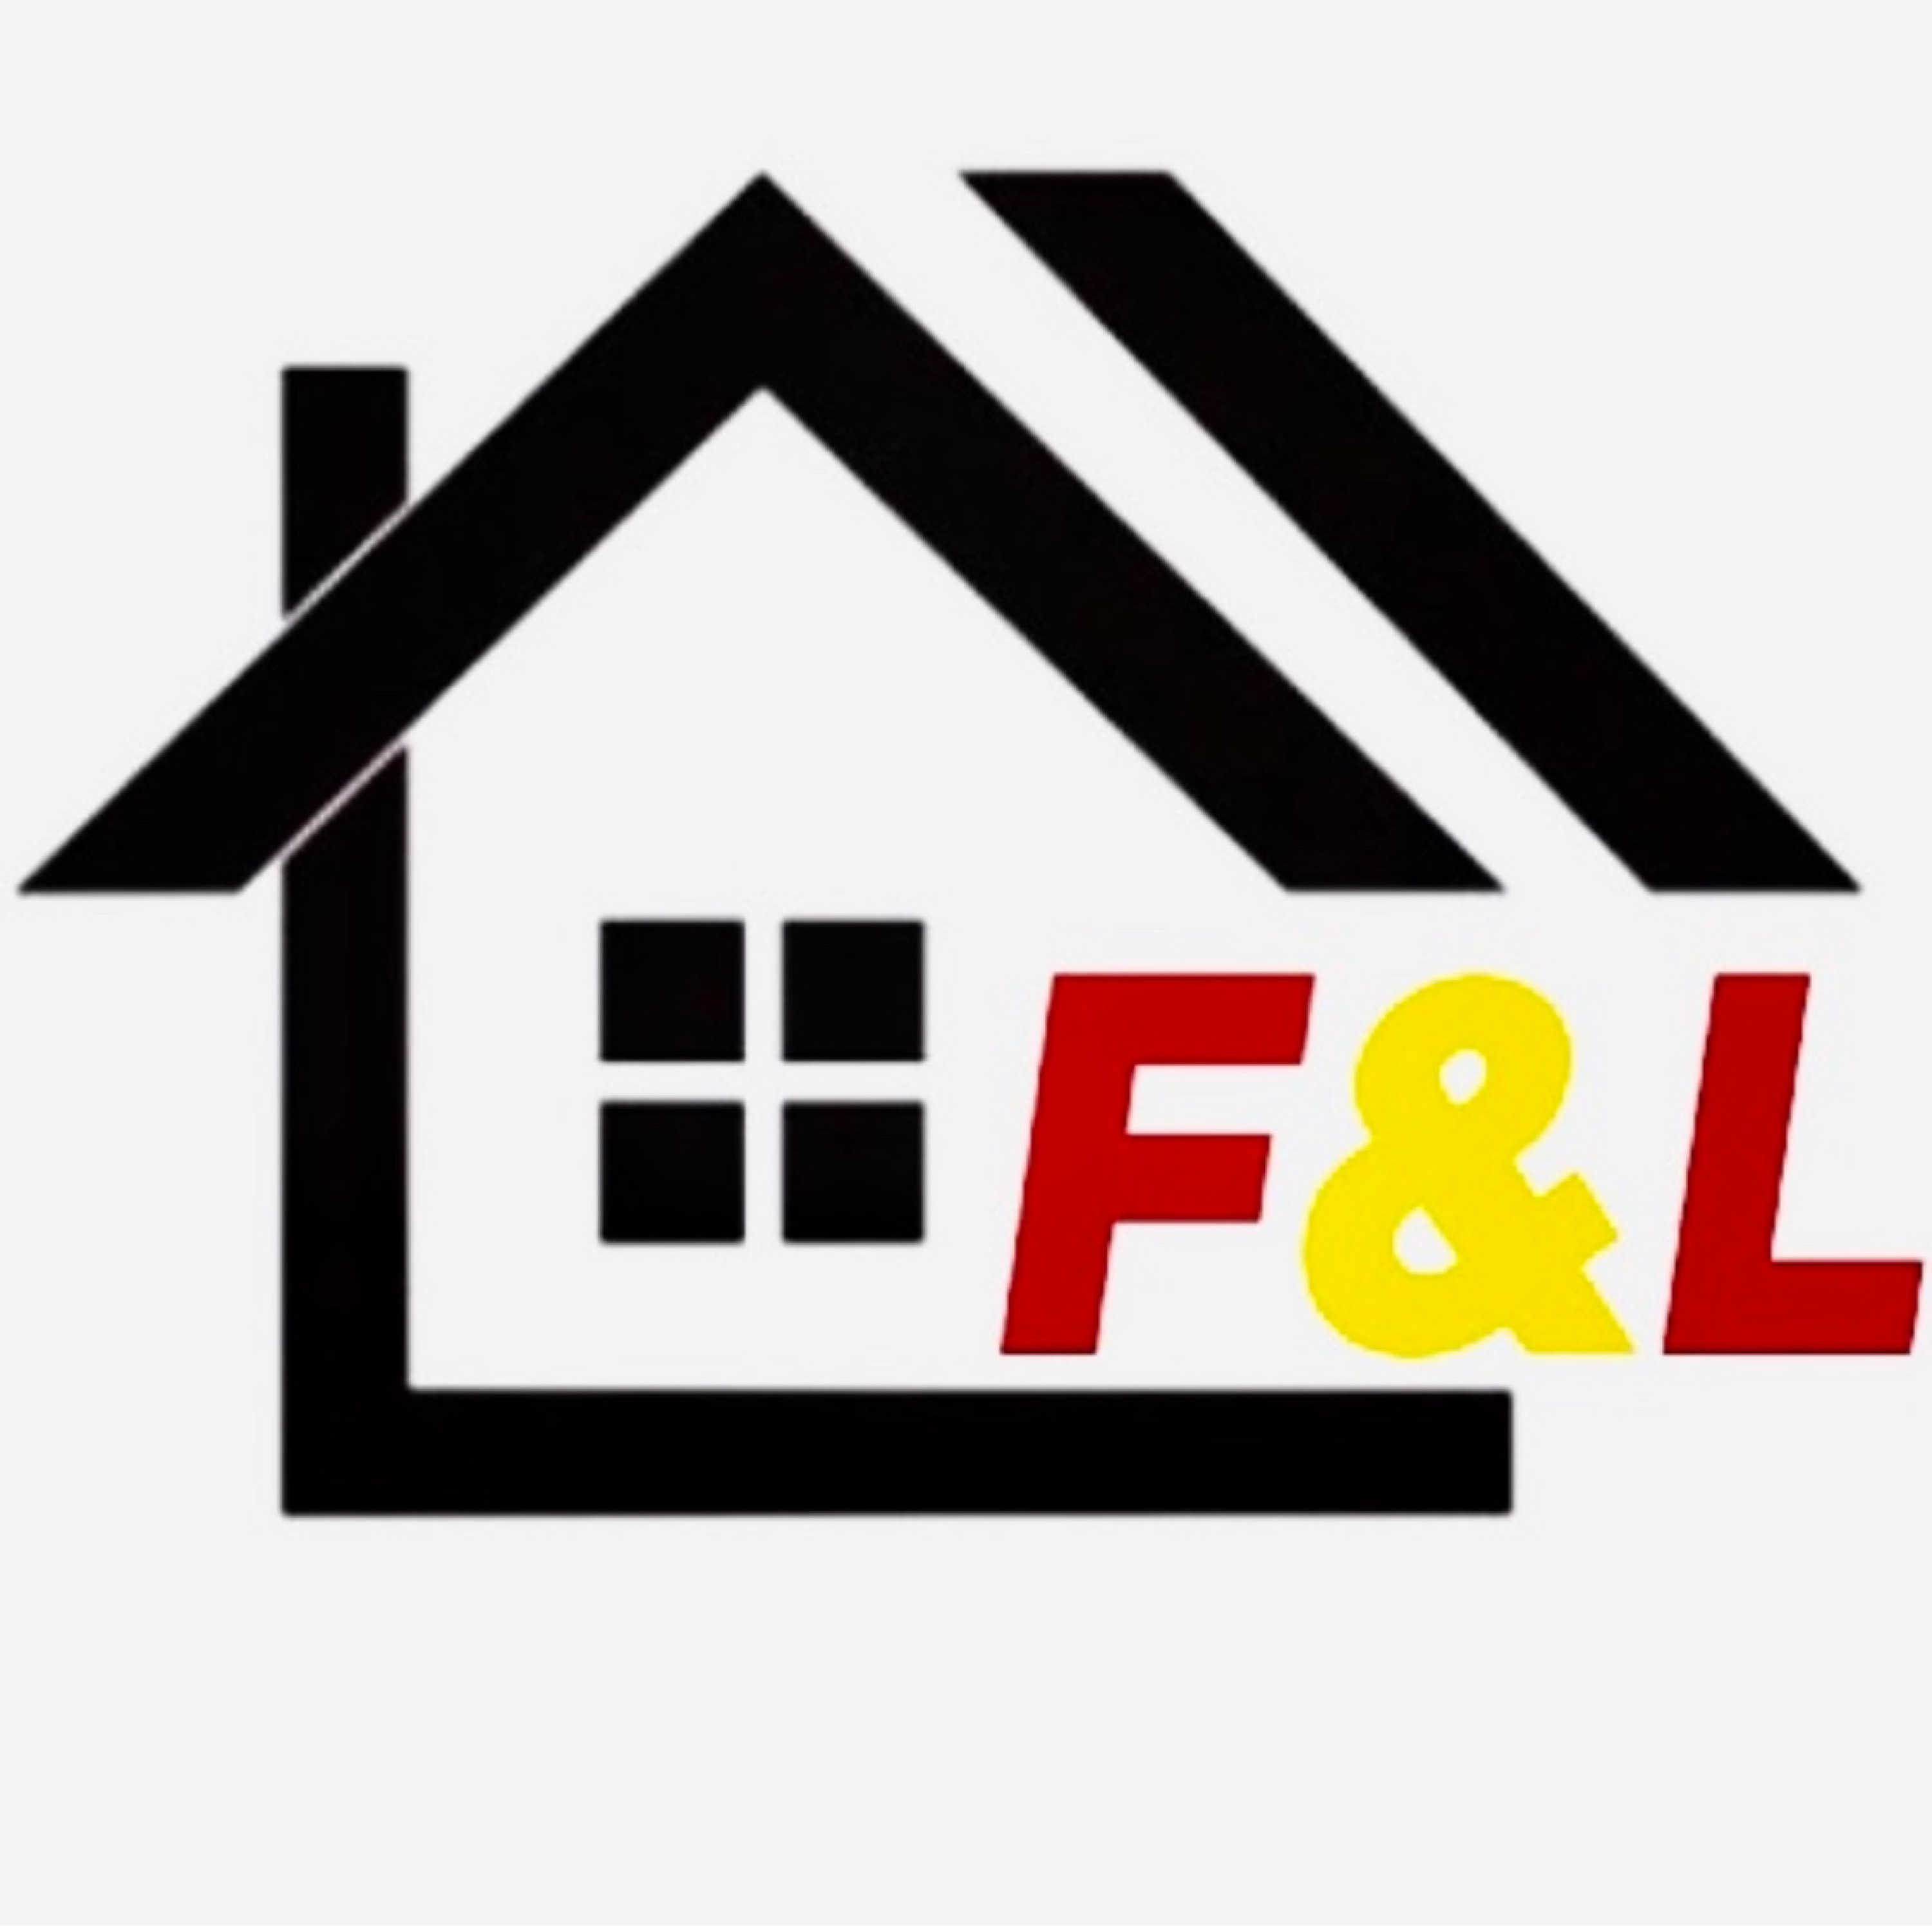 F&L Lead Dust Inspectors Logo